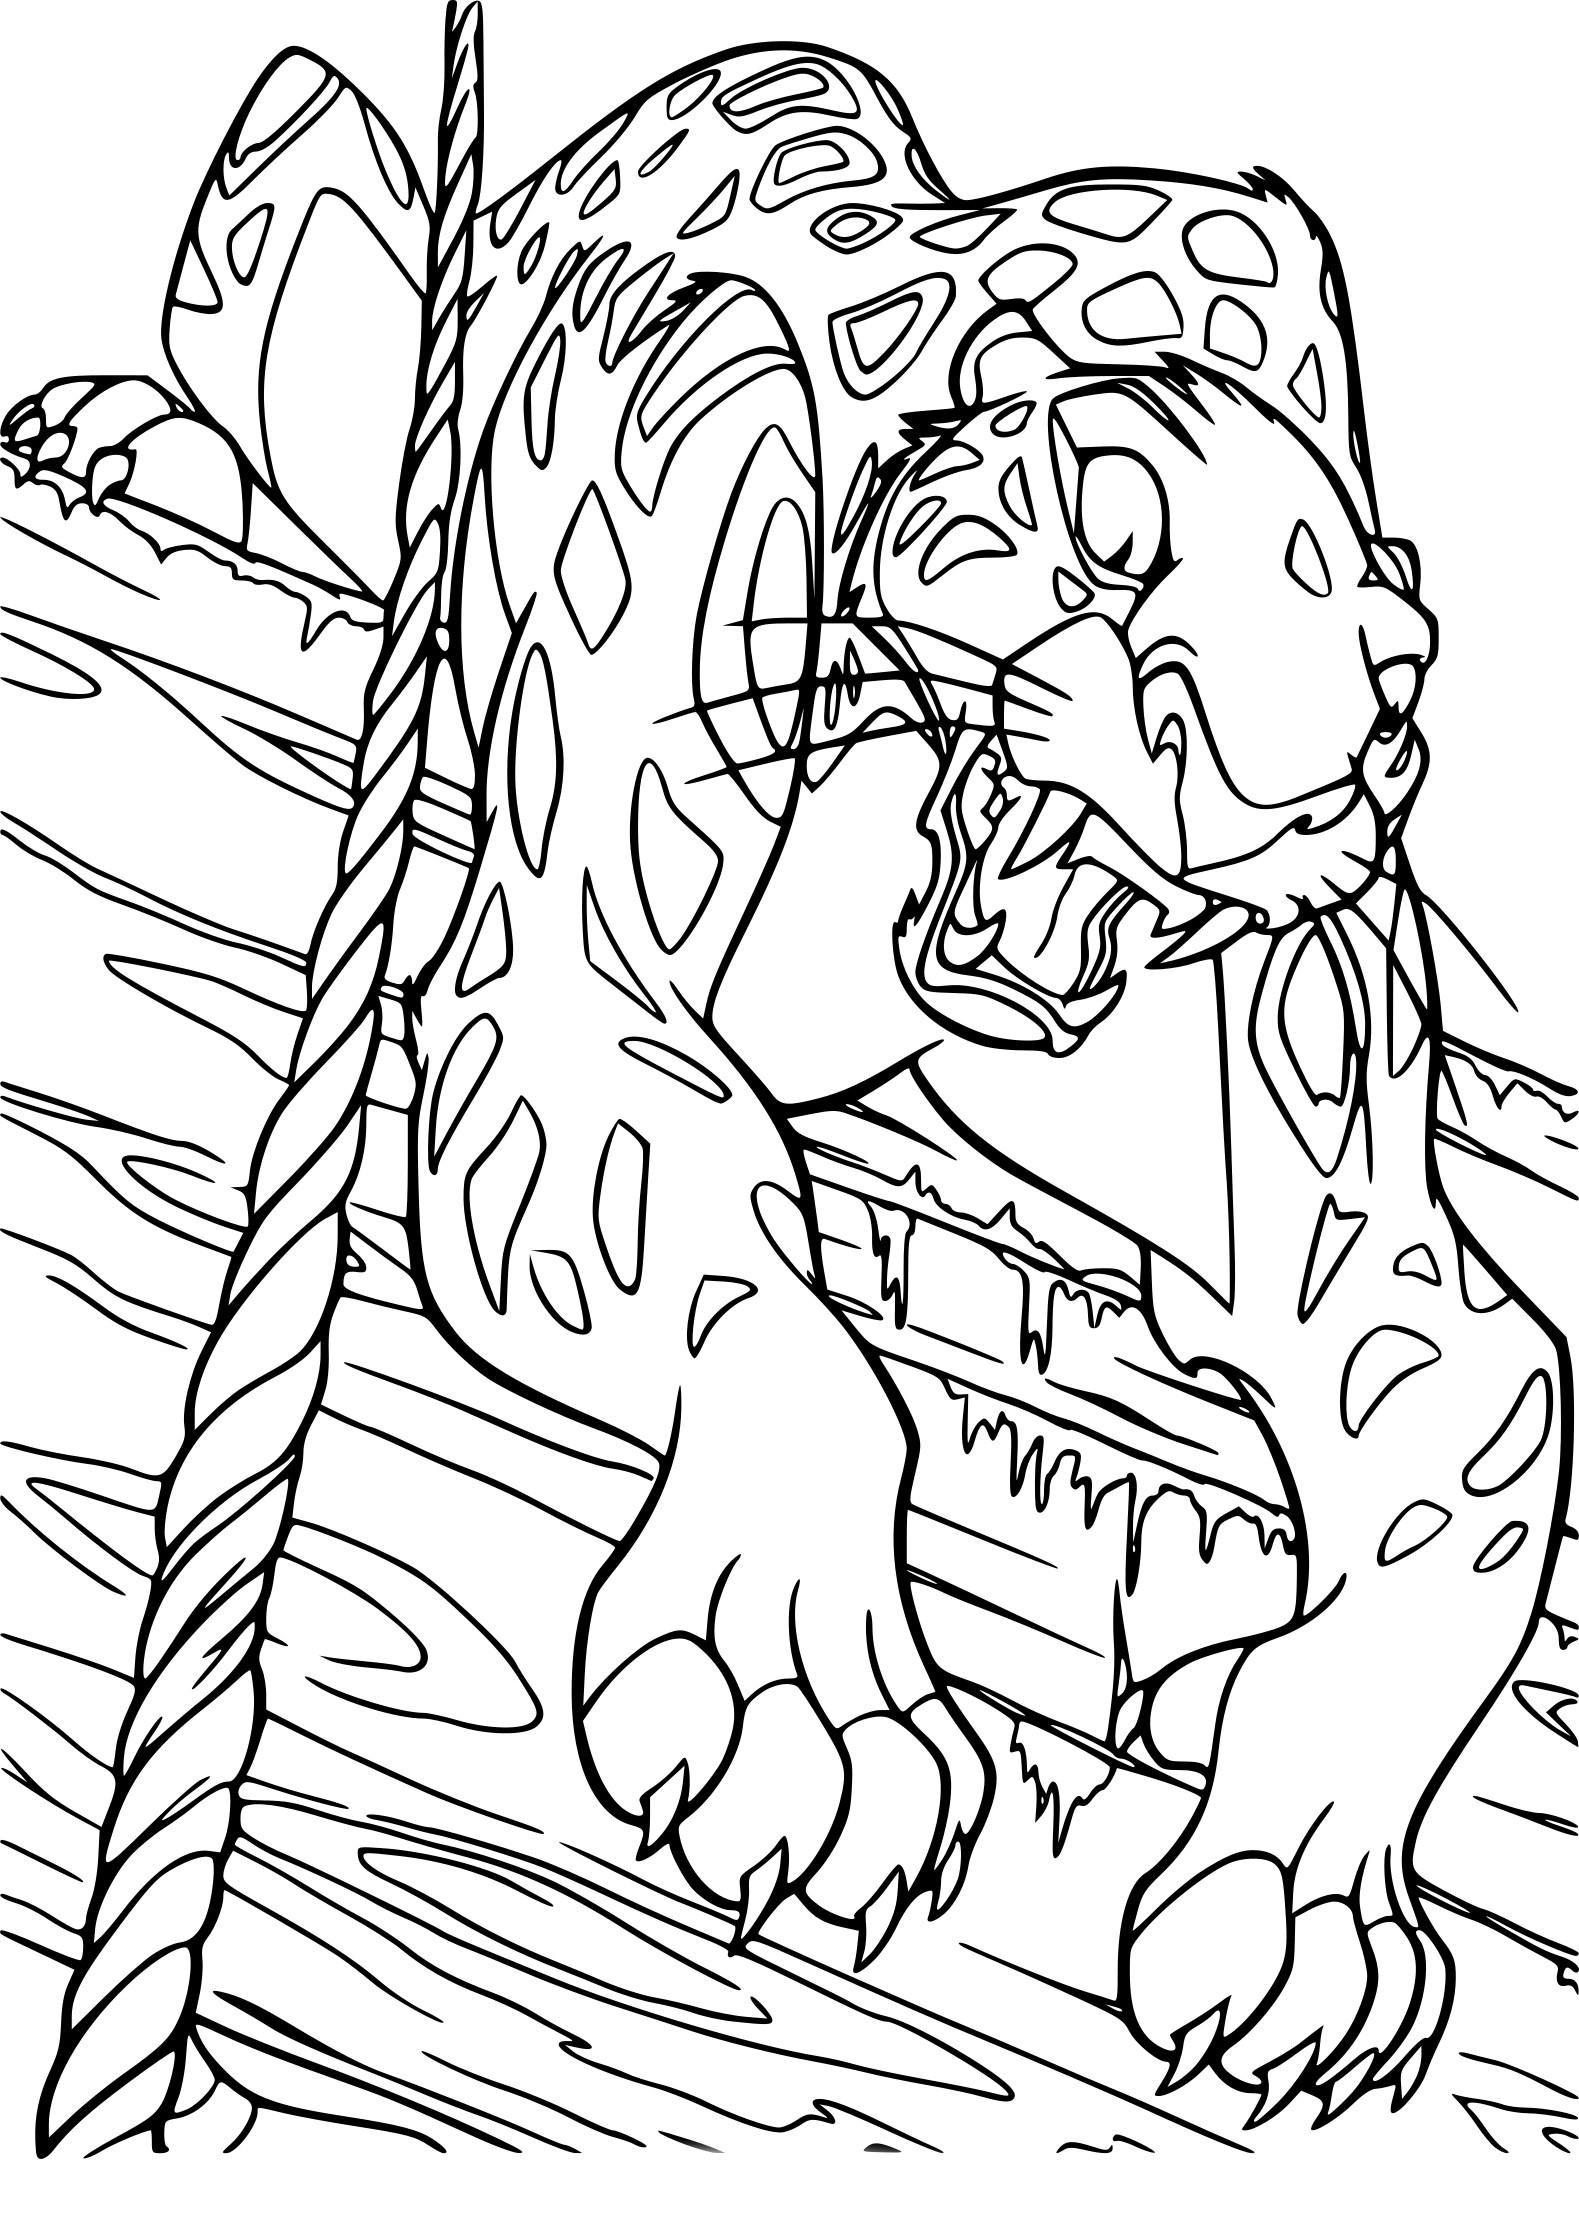 Tiger In Tarzan coloring page